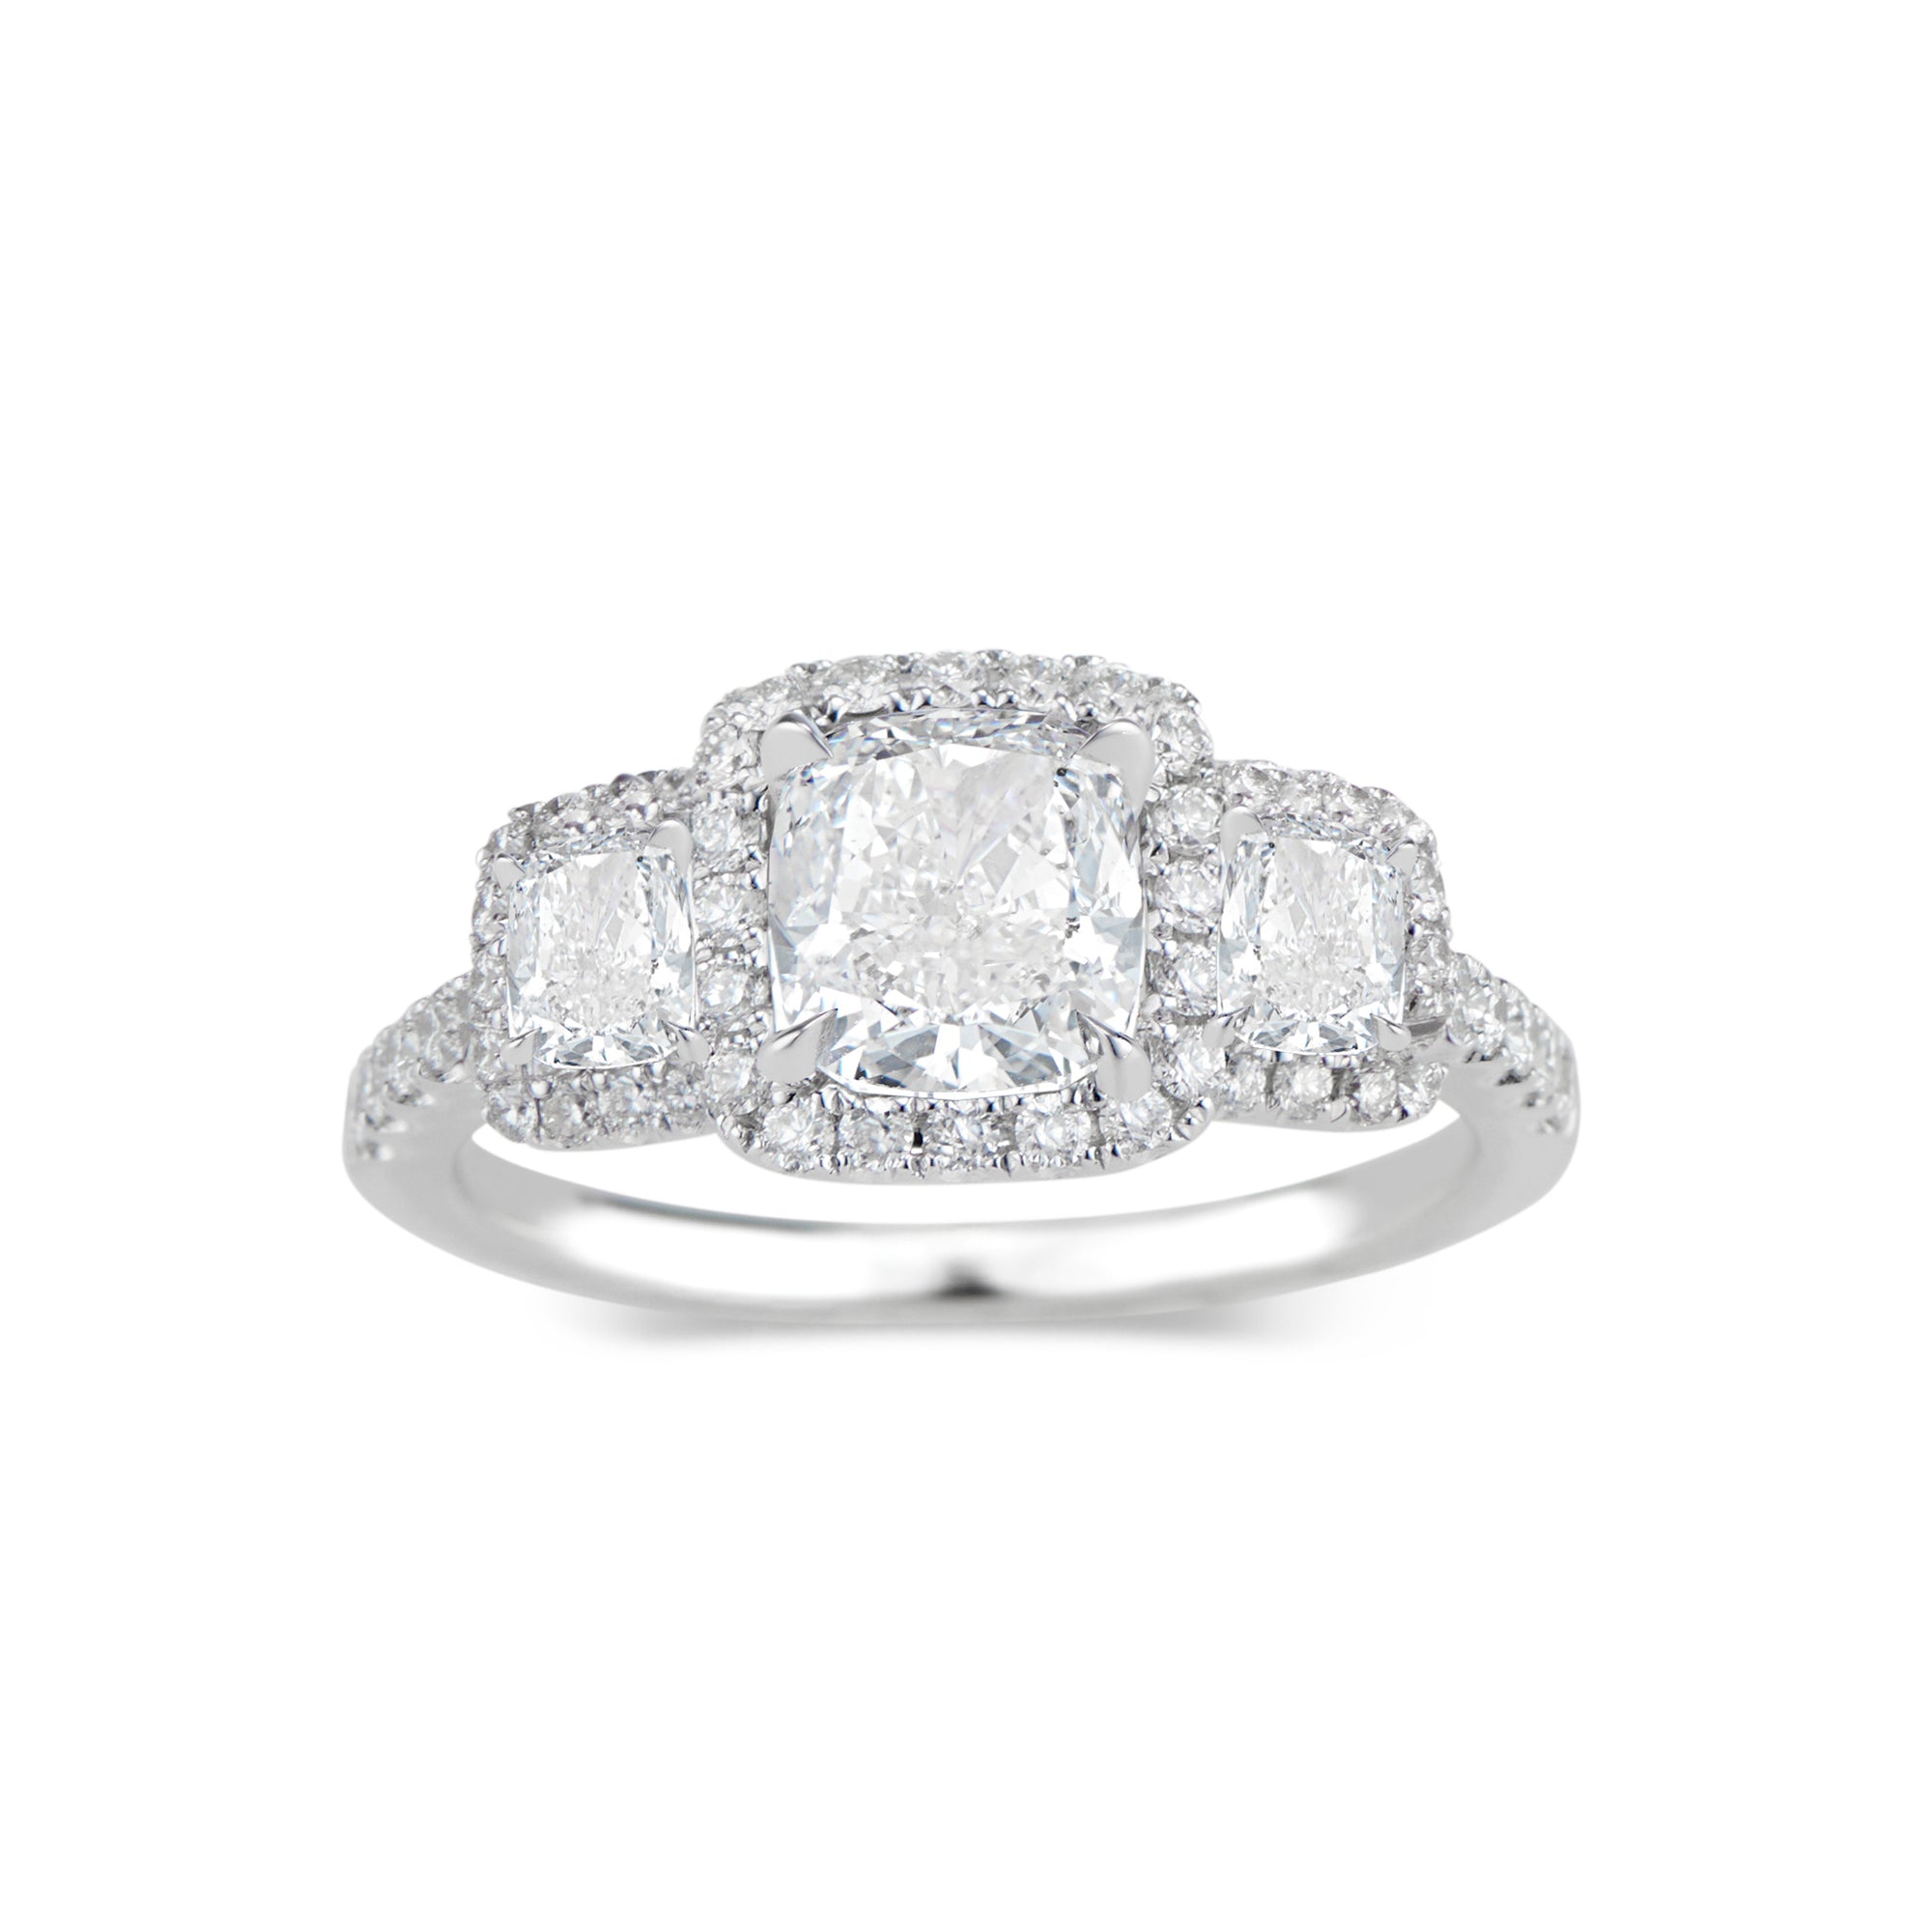 Three-Stone Cushion Halo Diamond Engagement Ring  18K weighting 4.50 GR  - 86 round diamonds totaling 0.47 carats